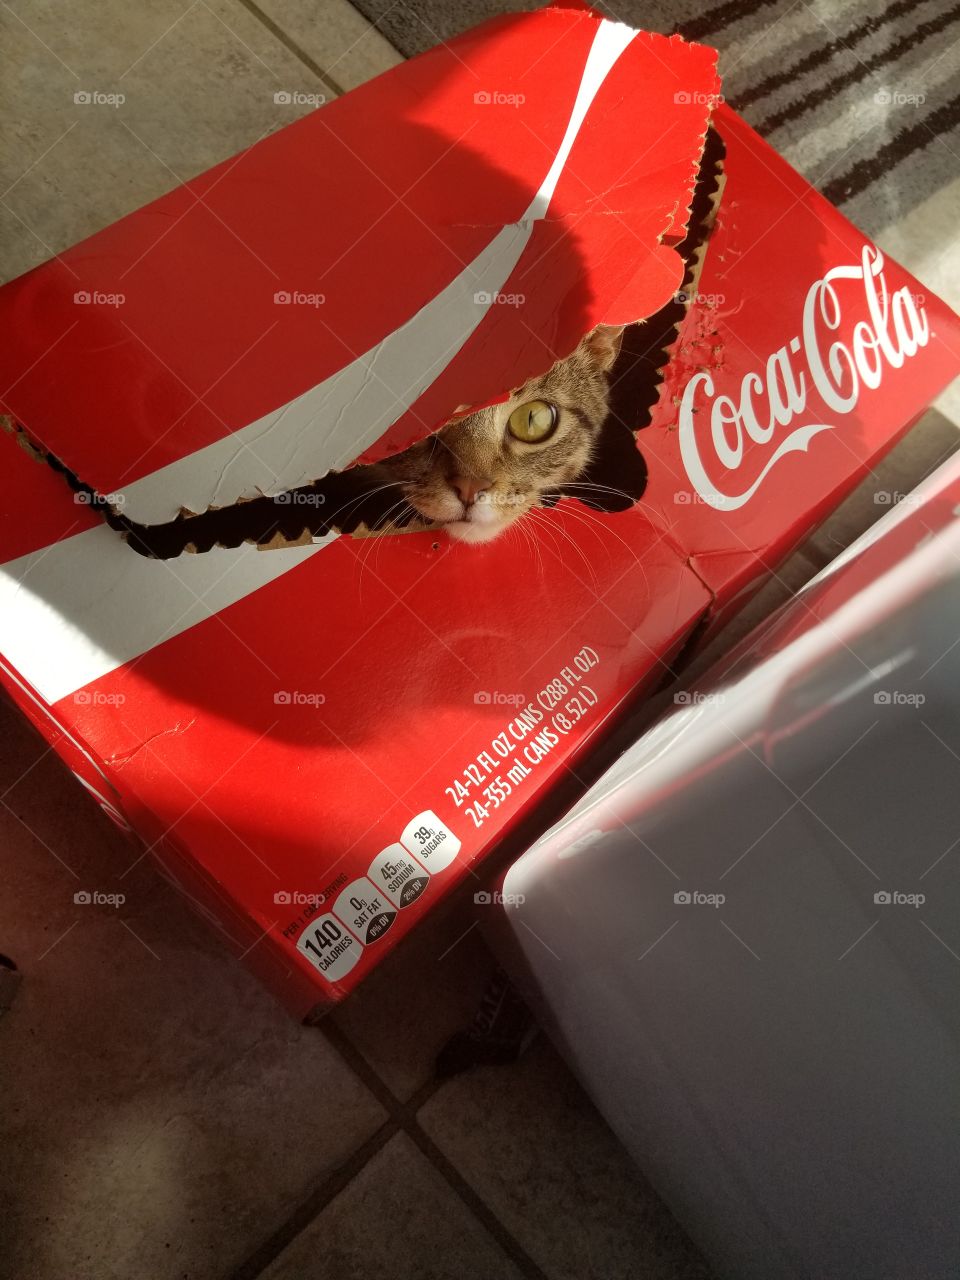 Peek-a-boo kitten in Coca Cola box, Grunt